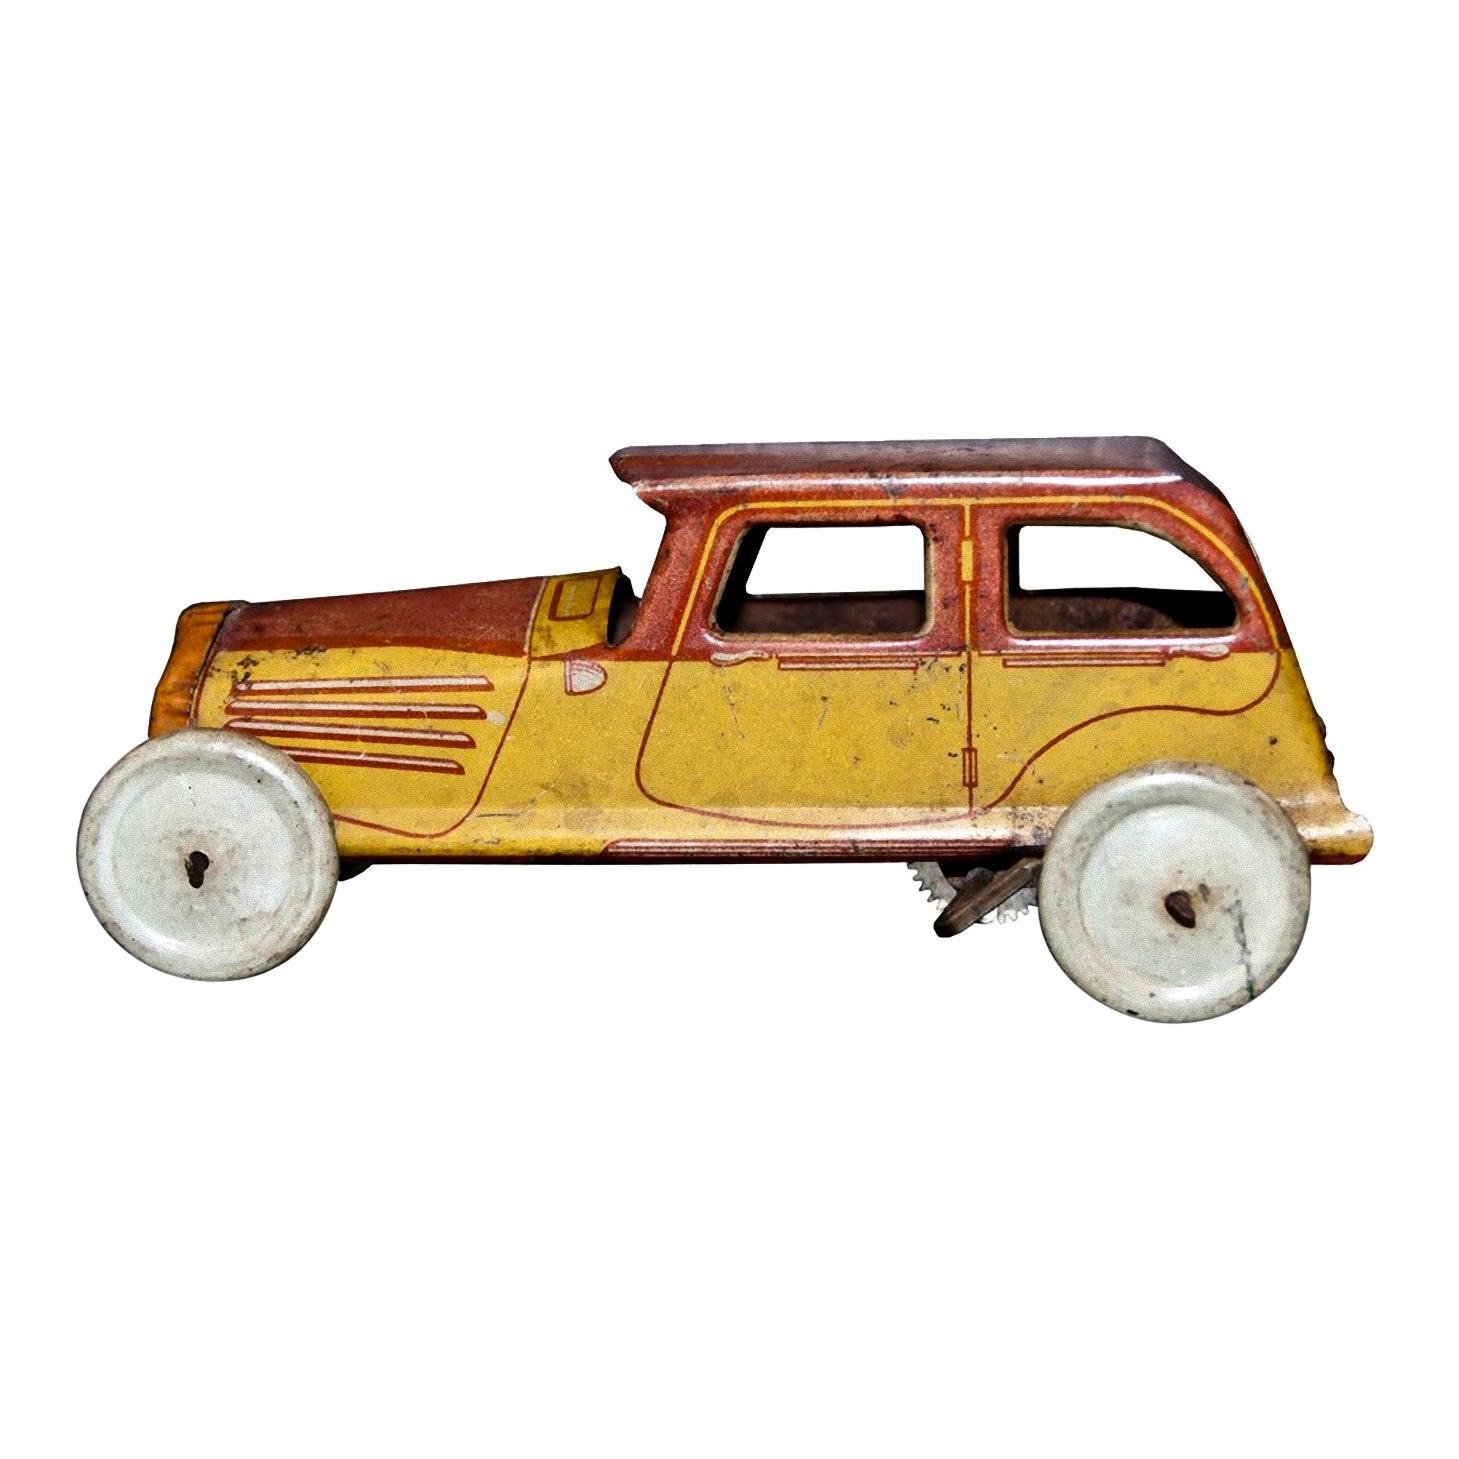 Original Vintage Toy, Wind up RG Car, Made in France, 1930s